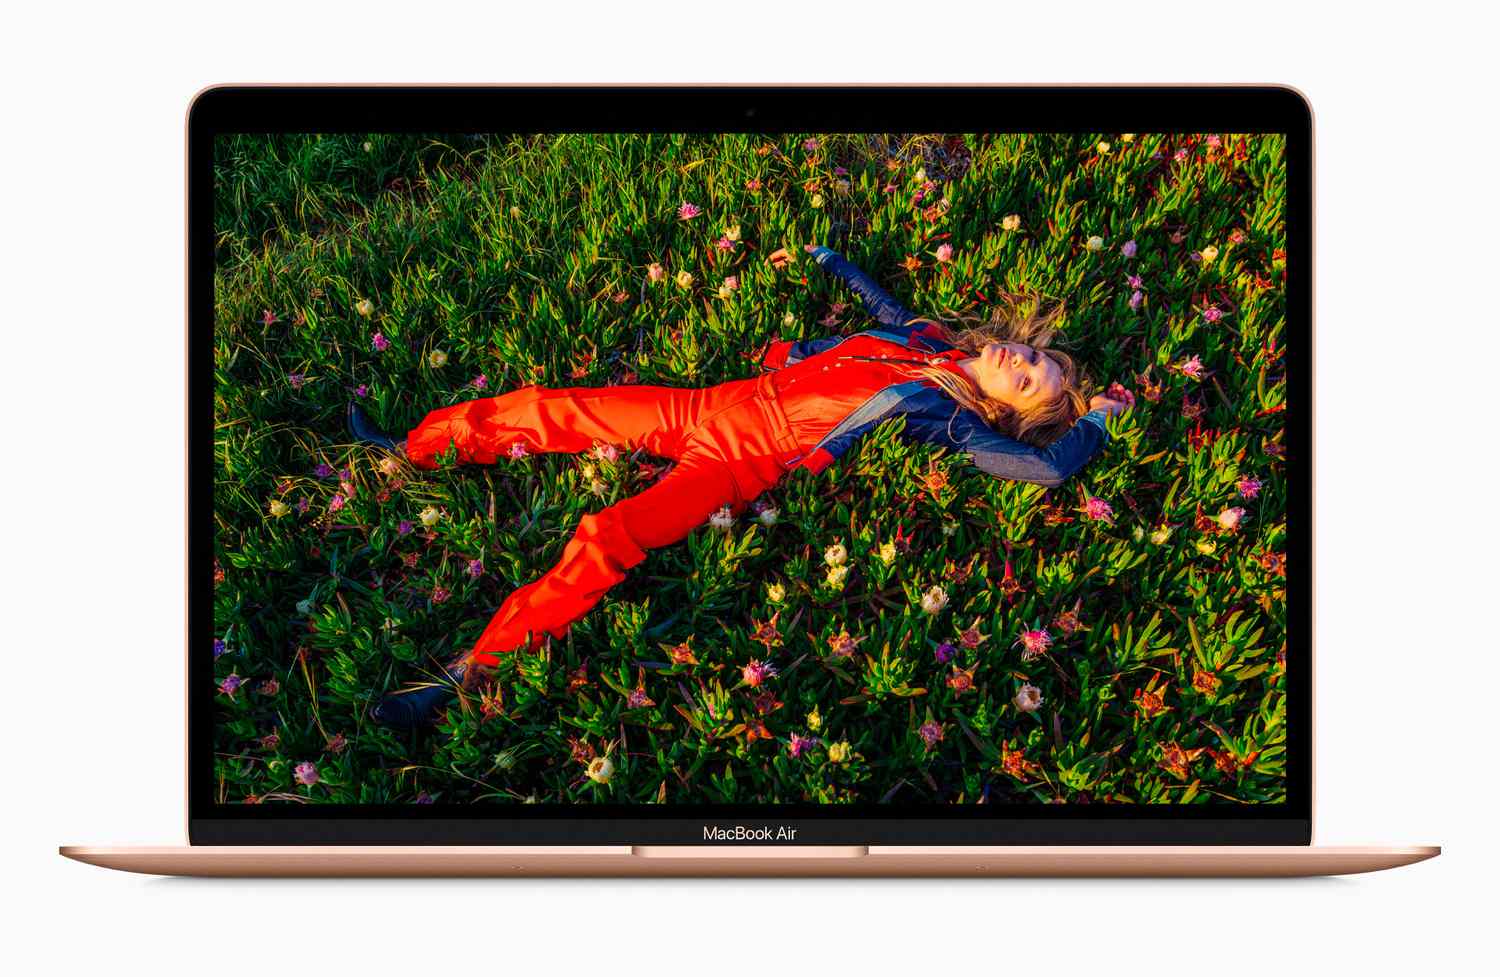 Apple new macbookair gold retina display screen 11102020 2fd967570bd84859826a69025837b68a